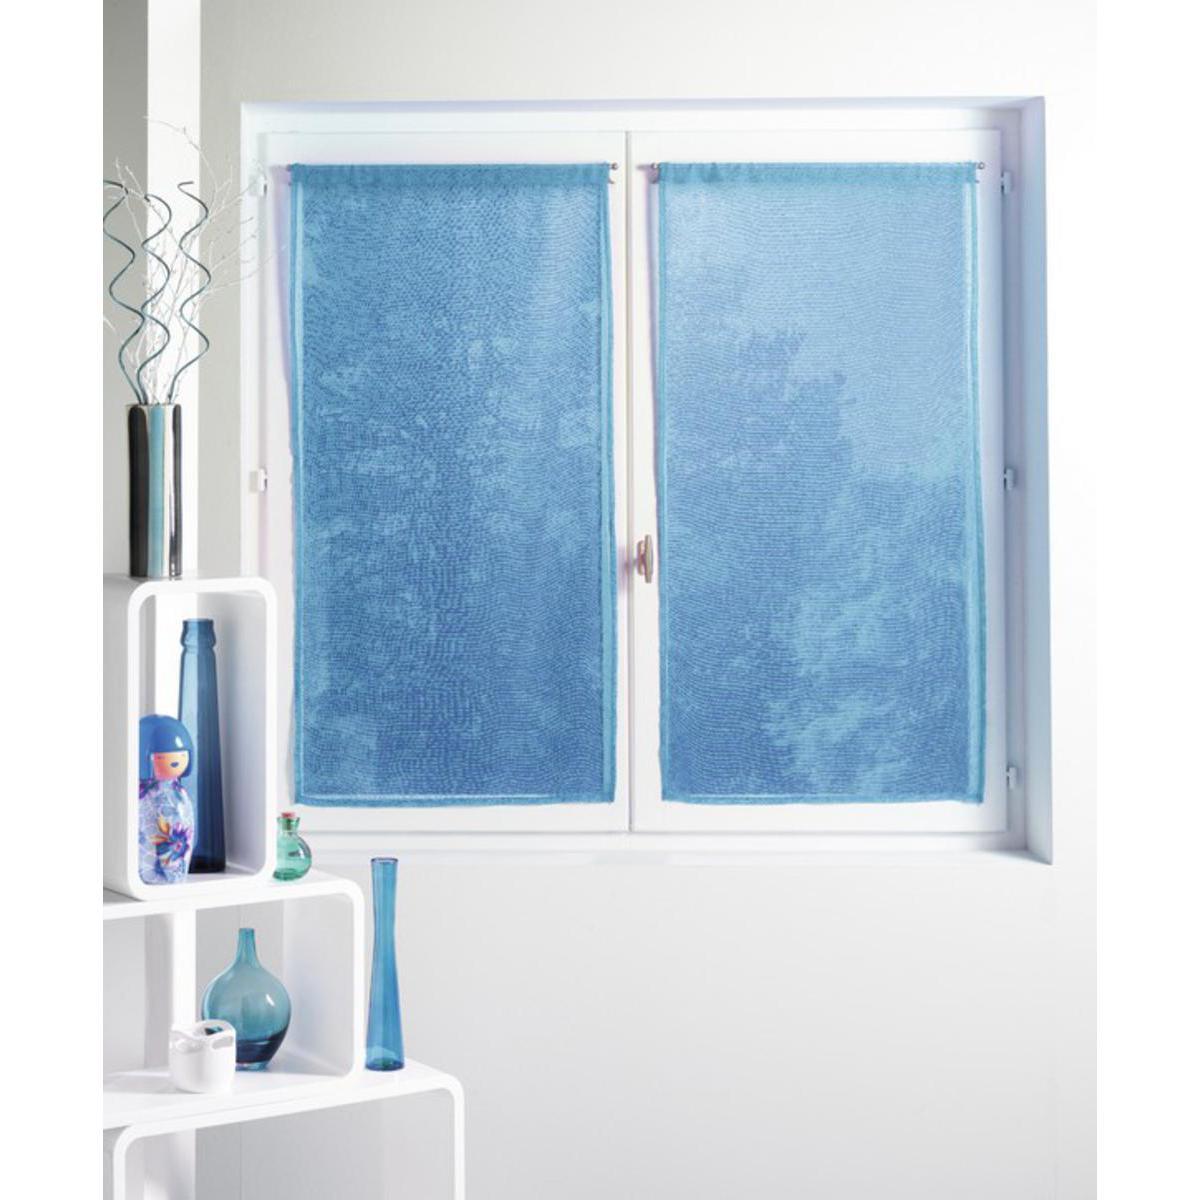 Paire de vitrages Alibi en polyester - 60 x 120 cm  - Bleu indigo